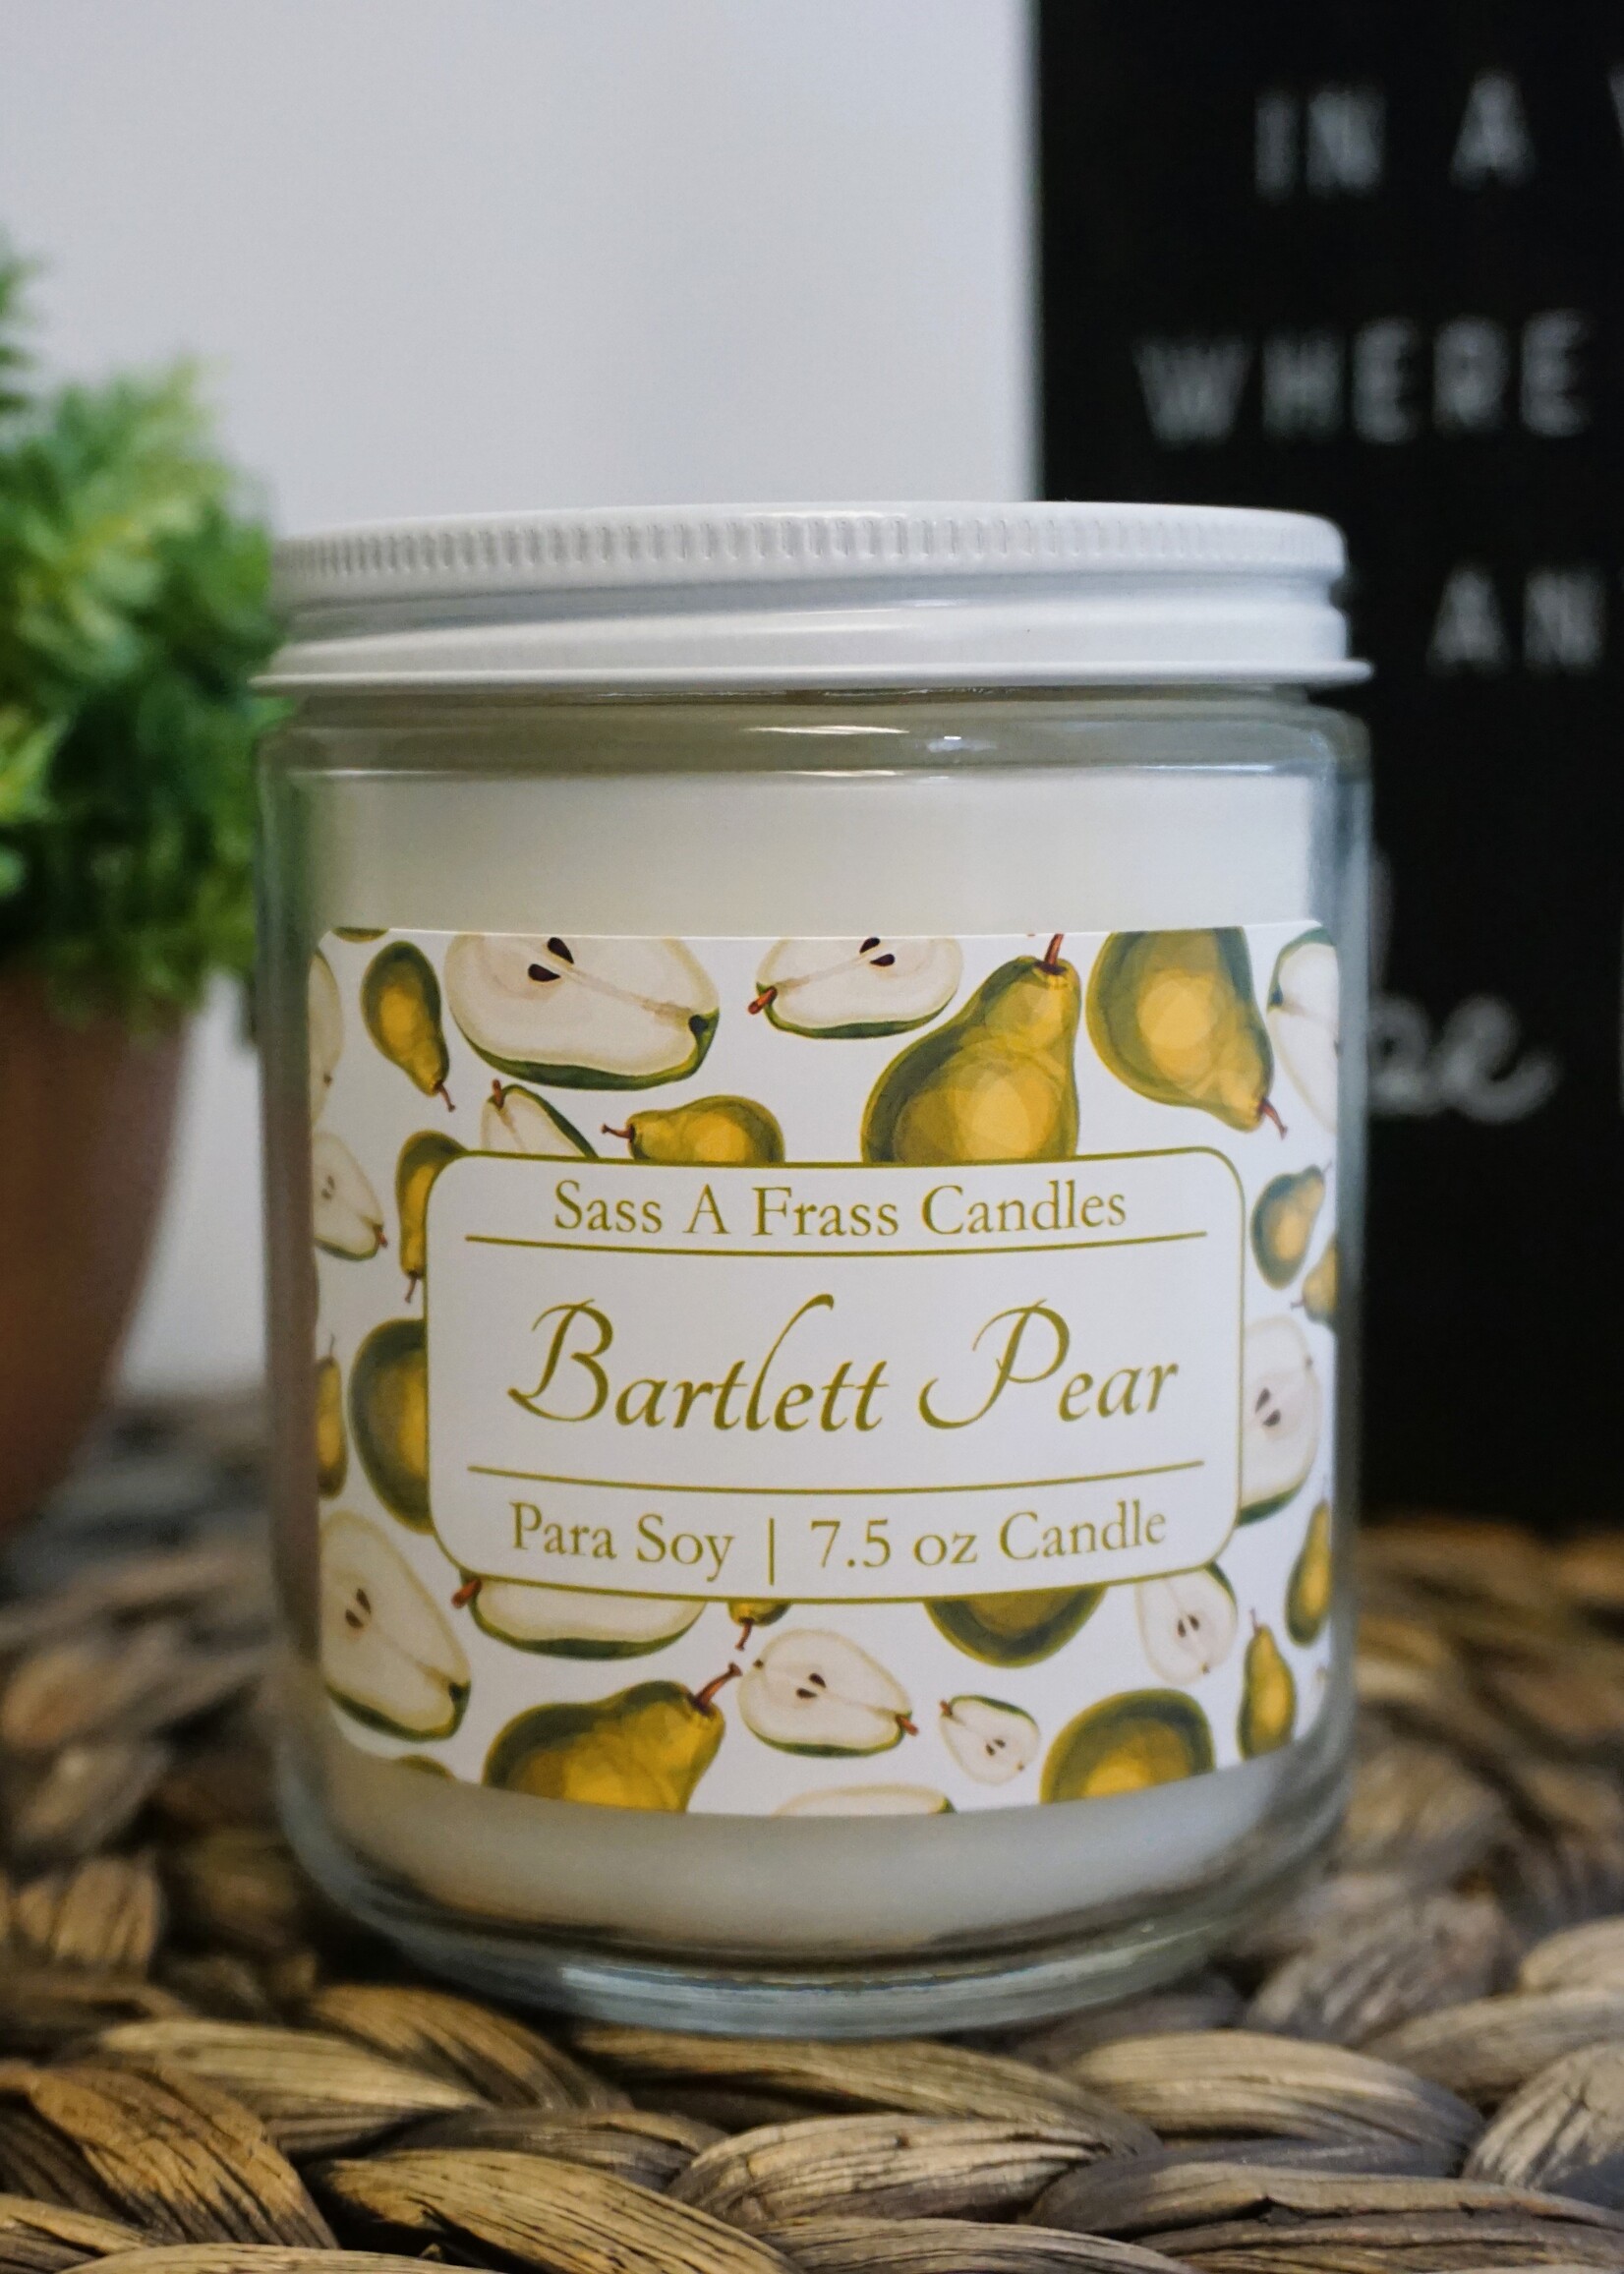 Bartlett Pear 7.5 oz Candle